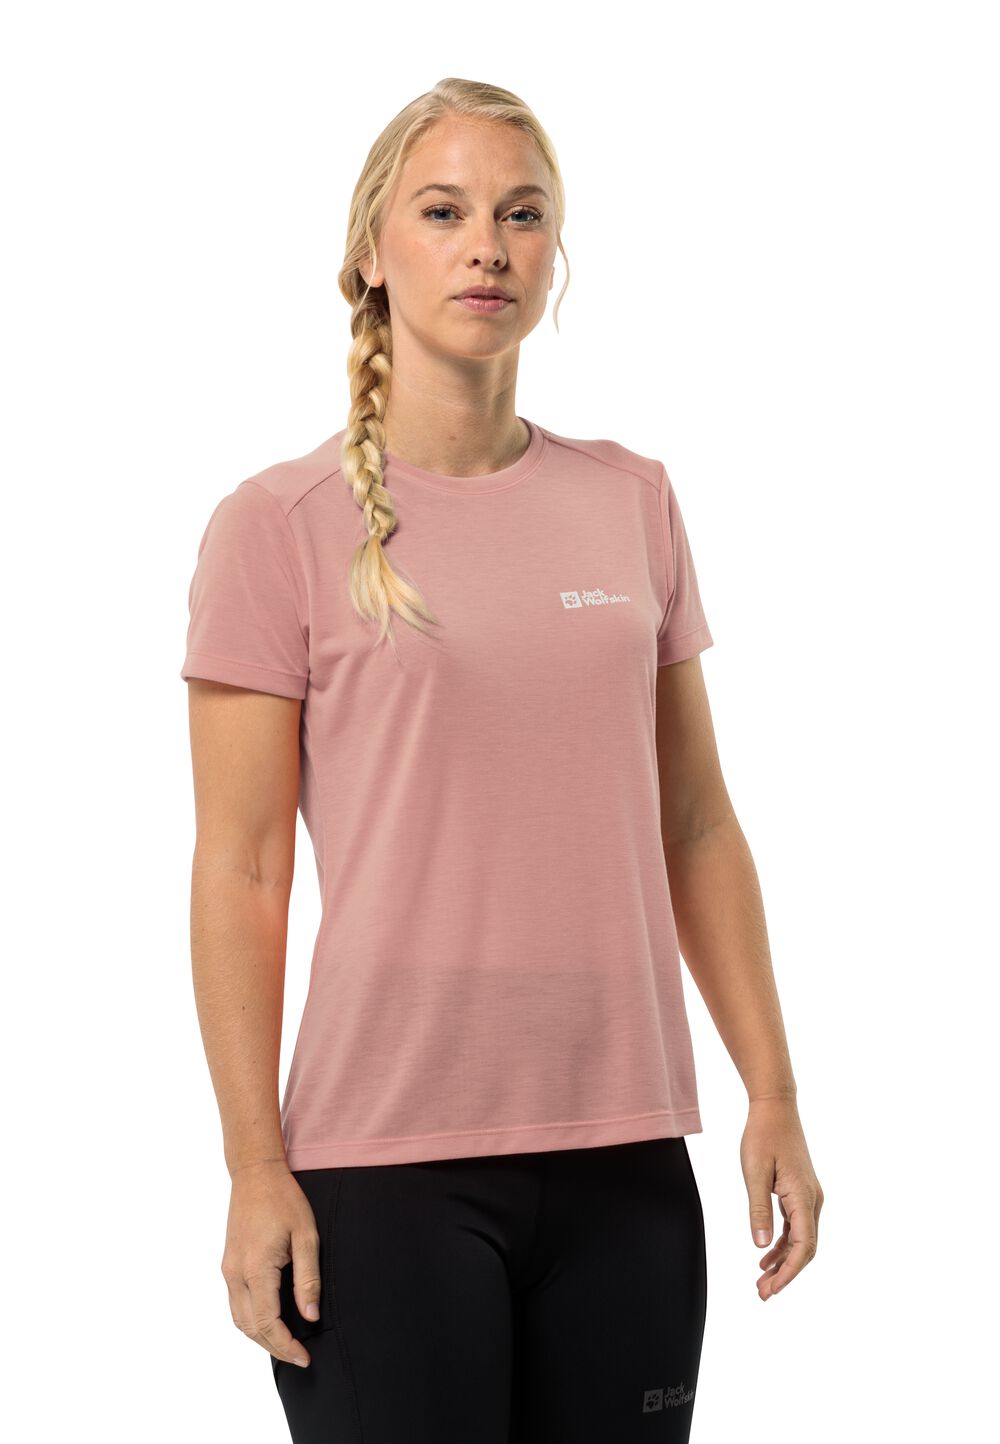 Jack Wolfskin Vonnan S S T-Shirt Women Functioneel shirt Dames S bruin rose dawn